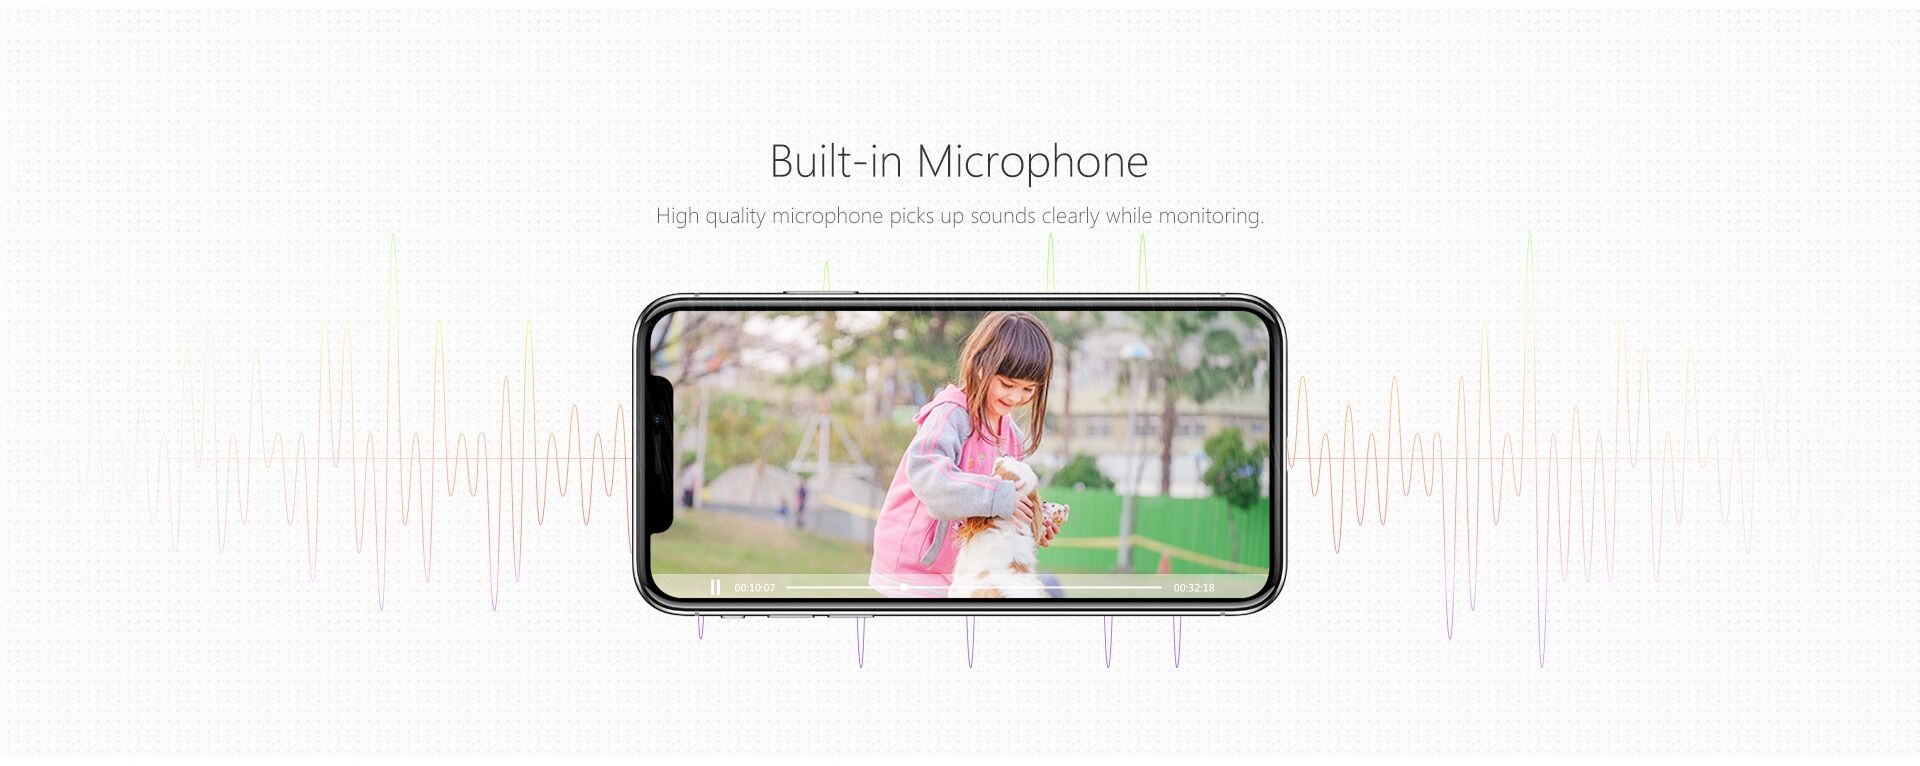 Dahua Imou outdoor camera wifi Bullet 2C PoE H.265 ImouLife app € 74,58